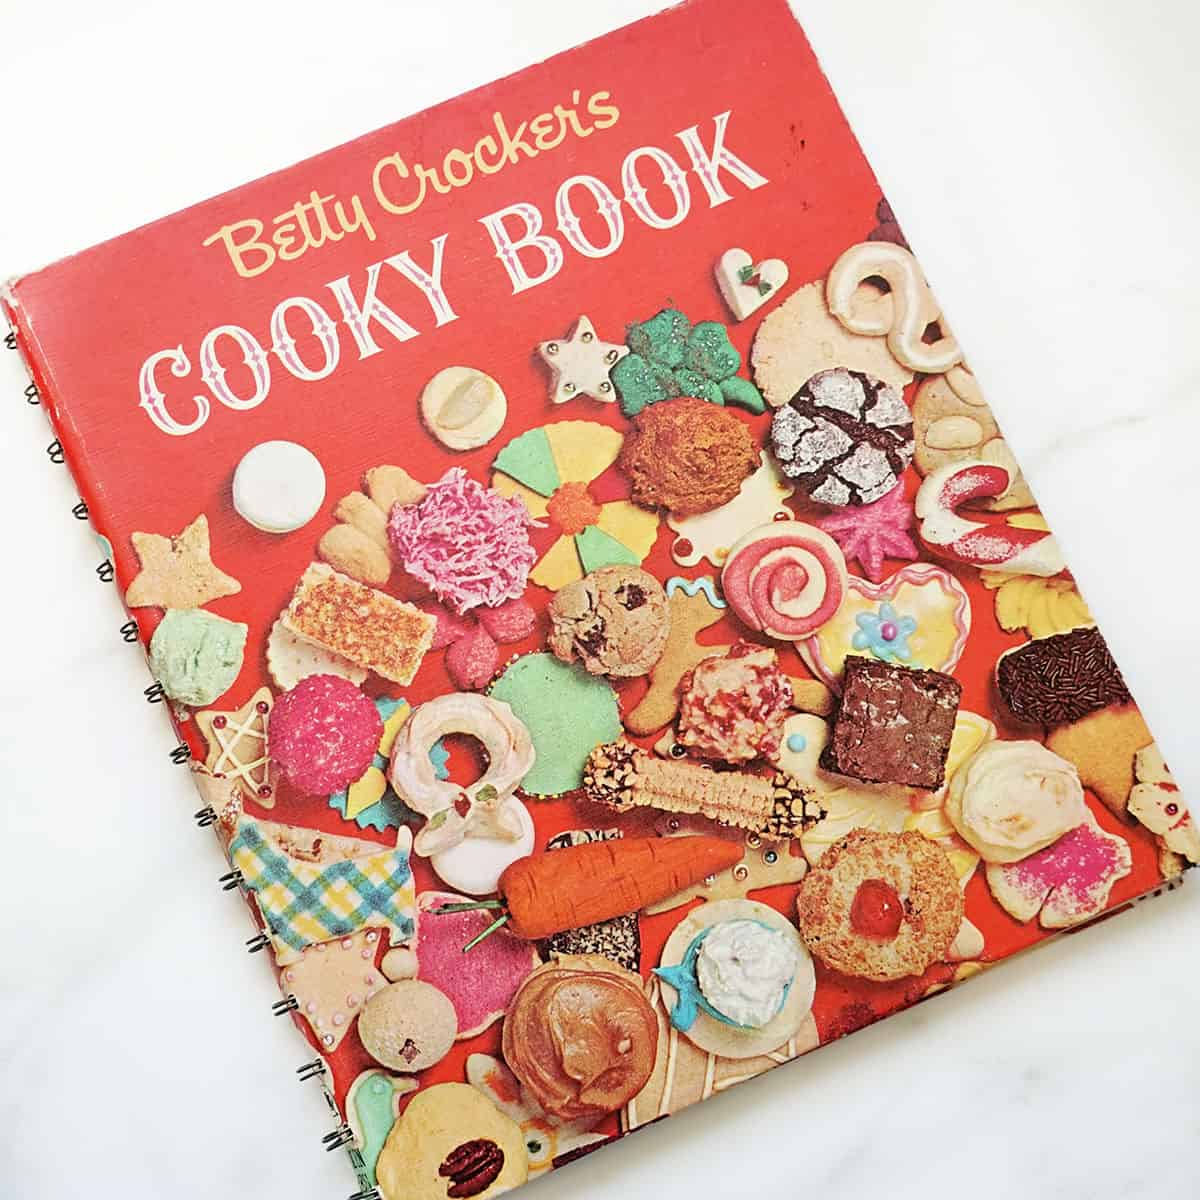 Betty Crocker Cooky Book 